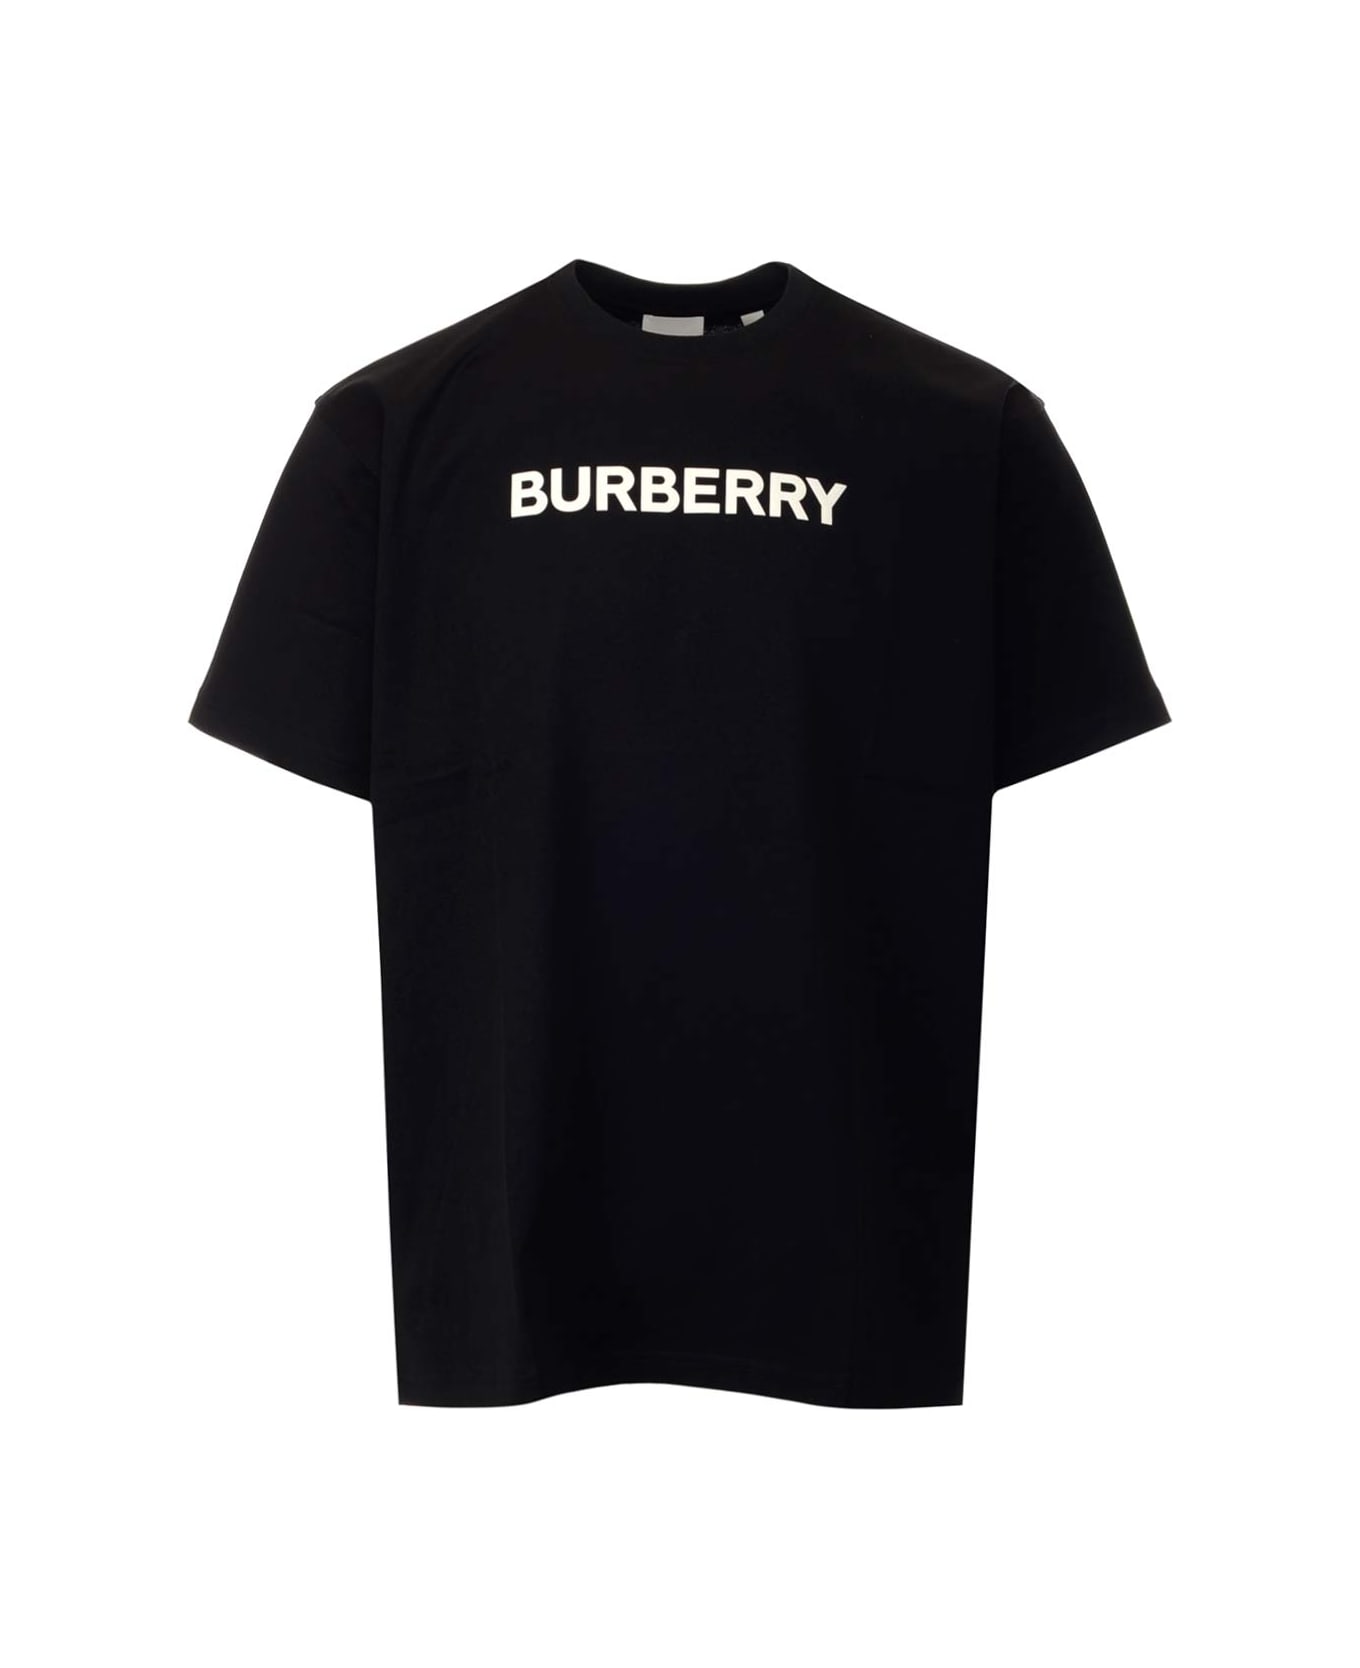 Burberry Black T-shirt With Logo - Black